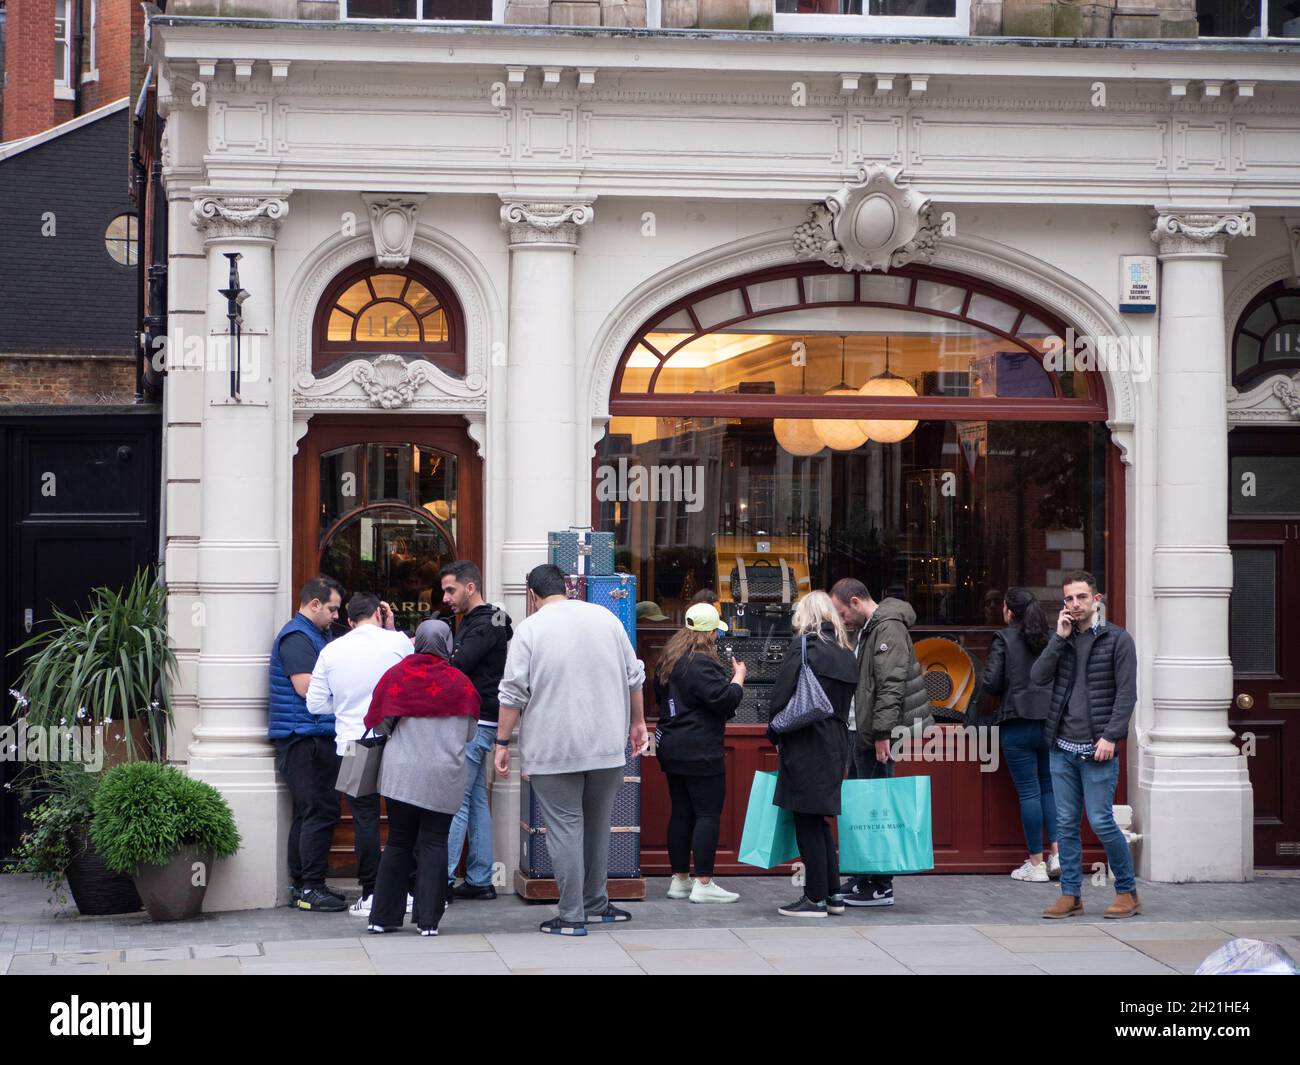 Goyard Shop in London